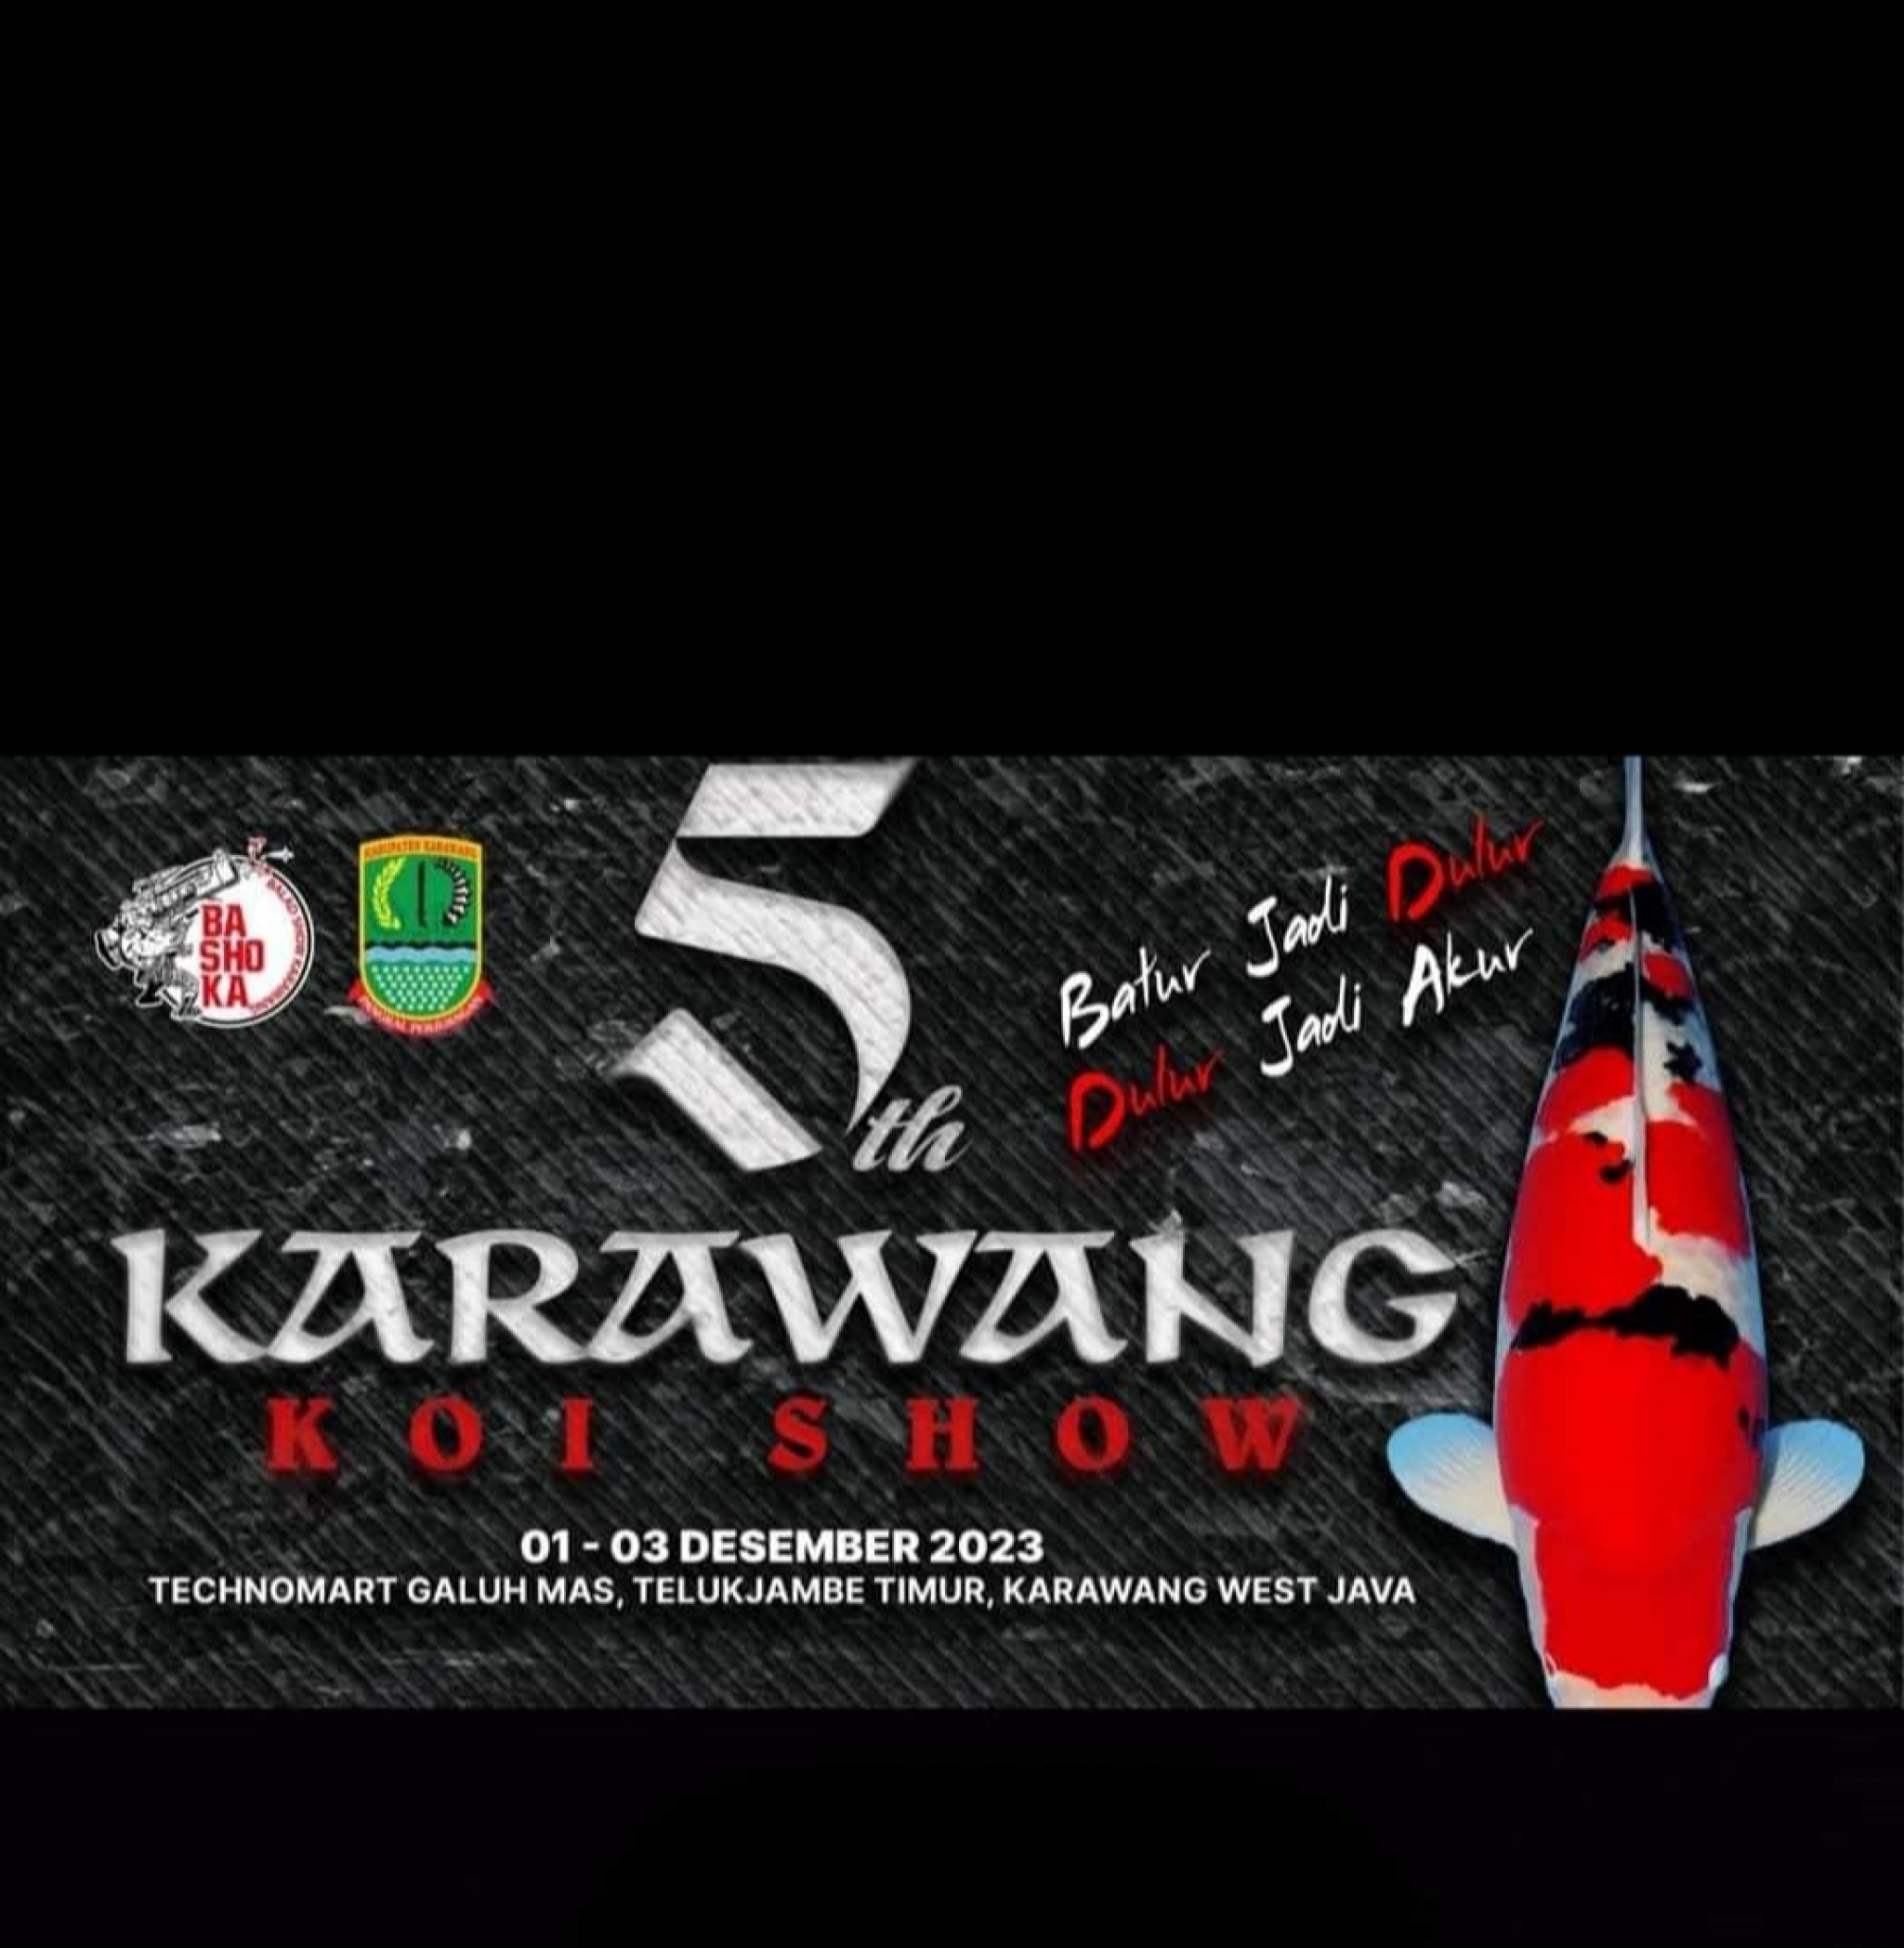 5th Karawang Koi Show2023